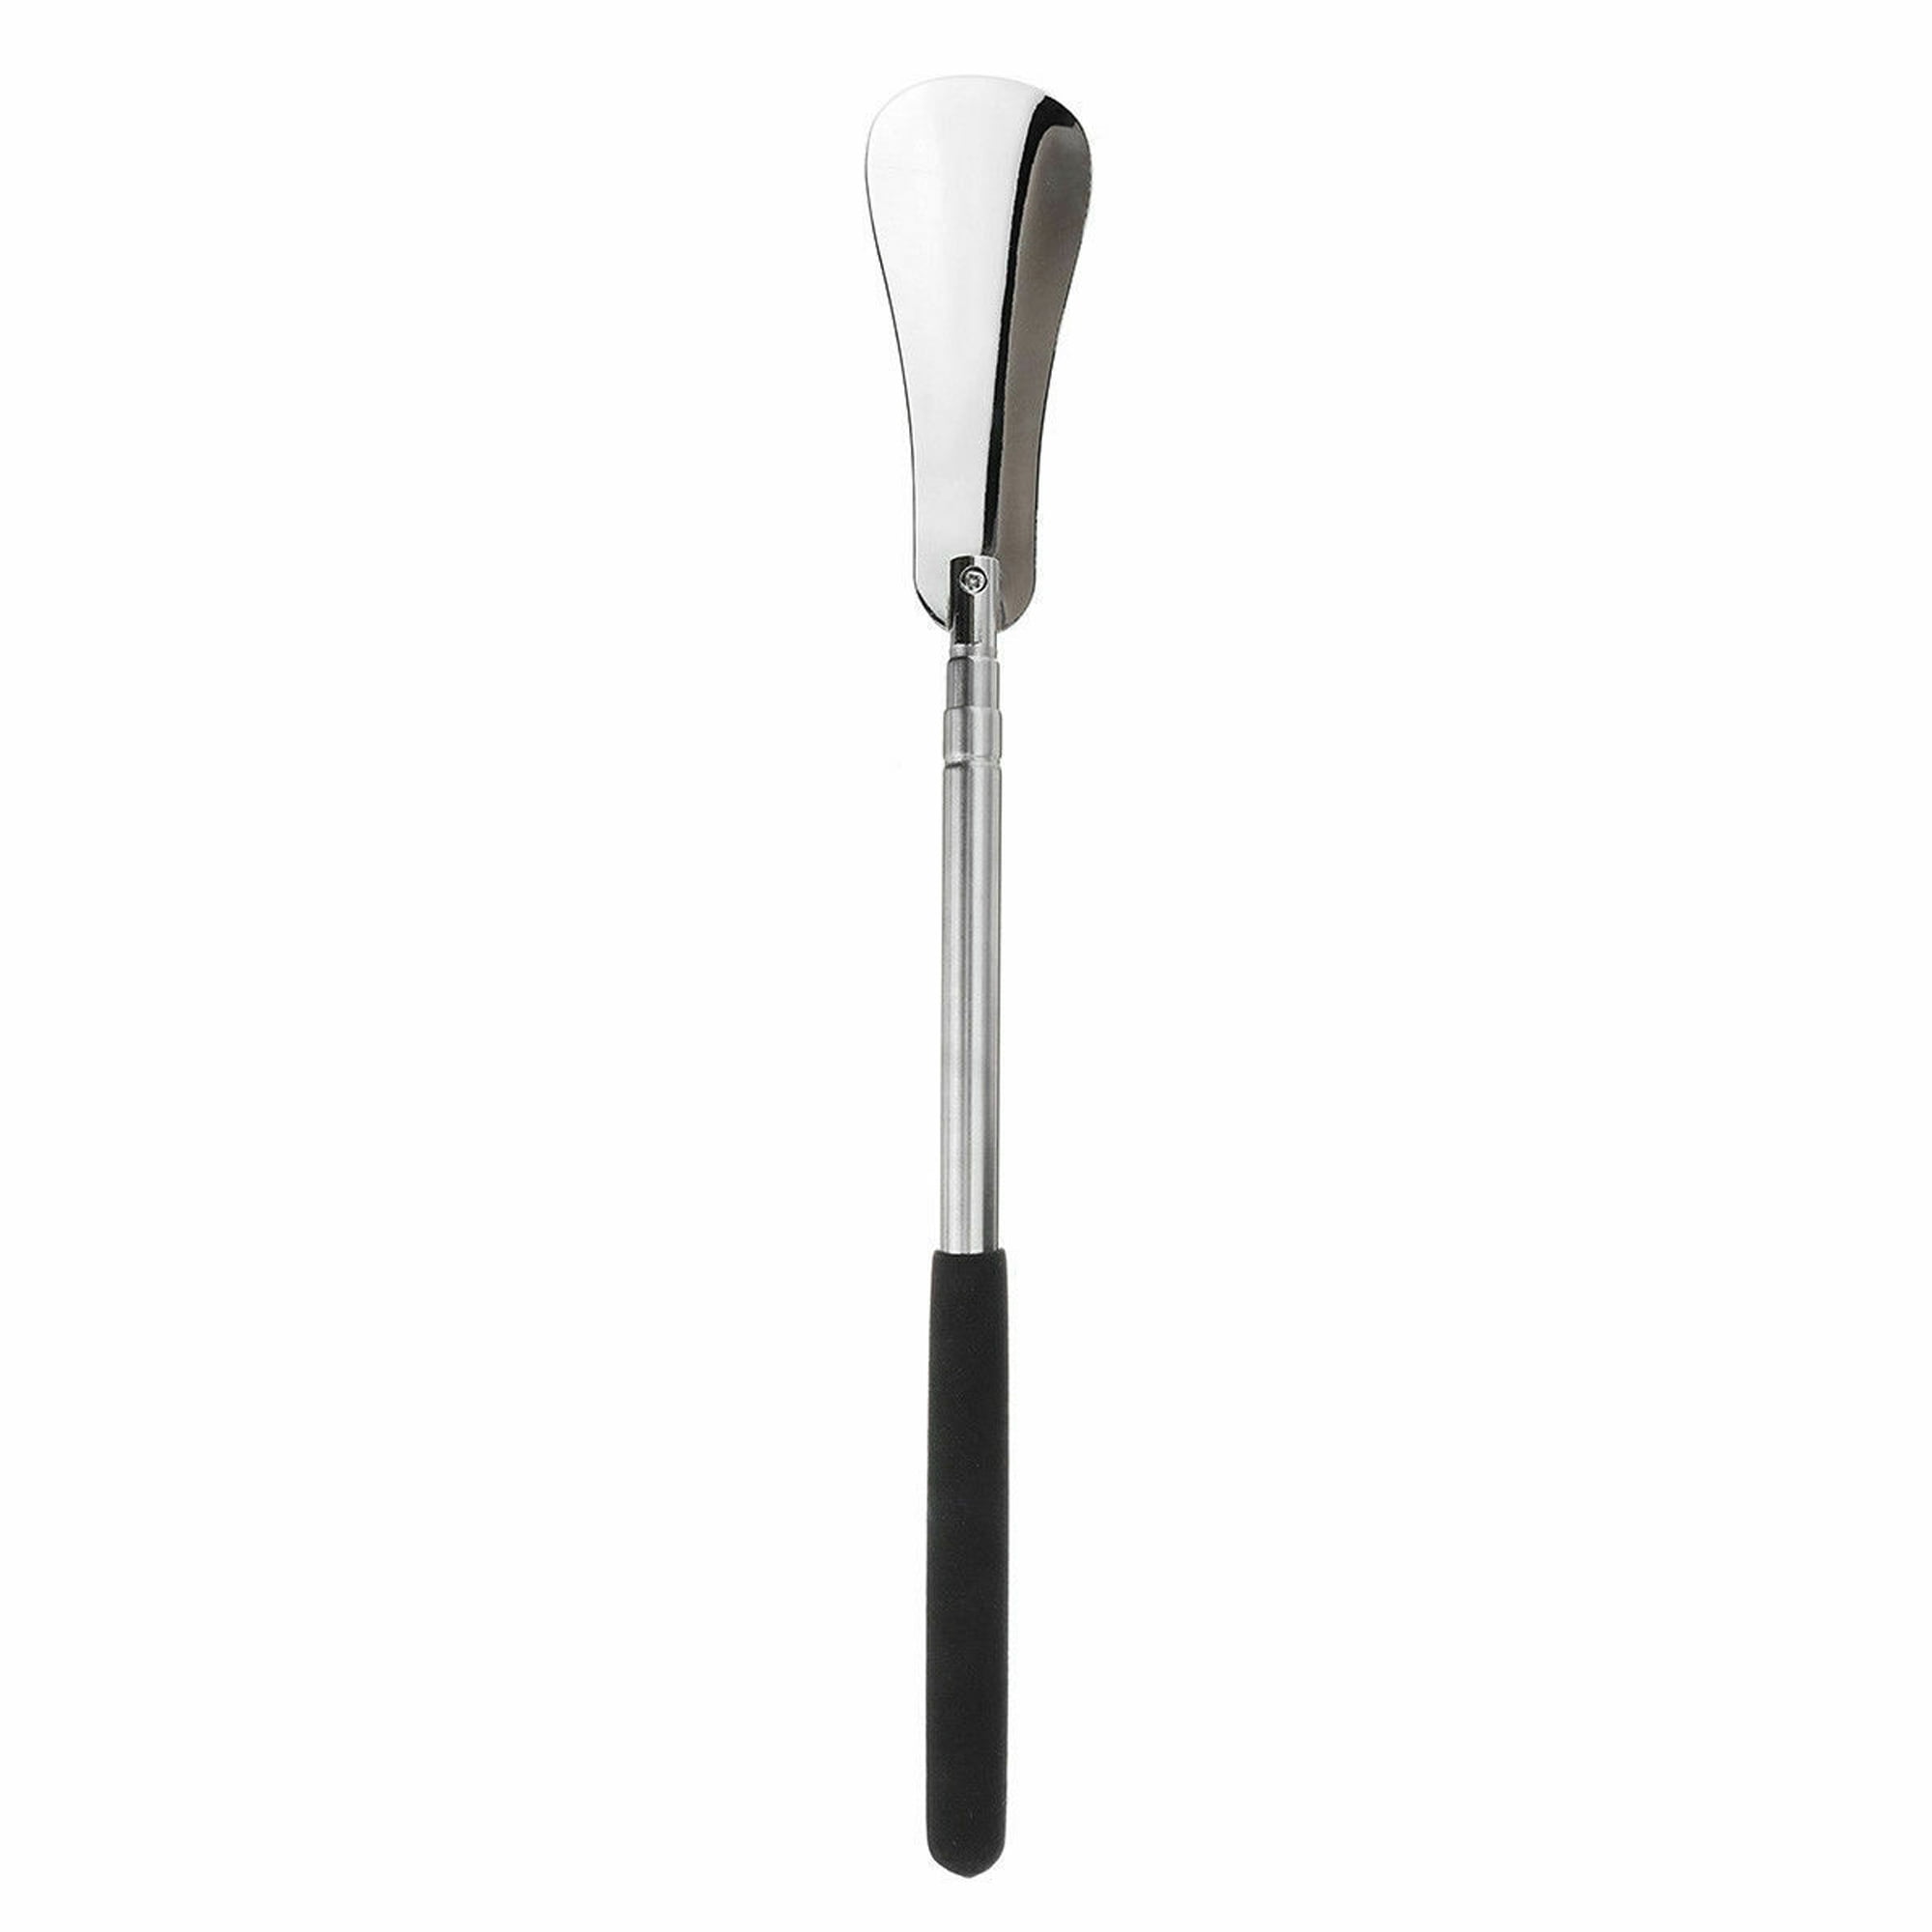 Professional long adjustable handle shoe horn stainless steel metal shoehorn JC 